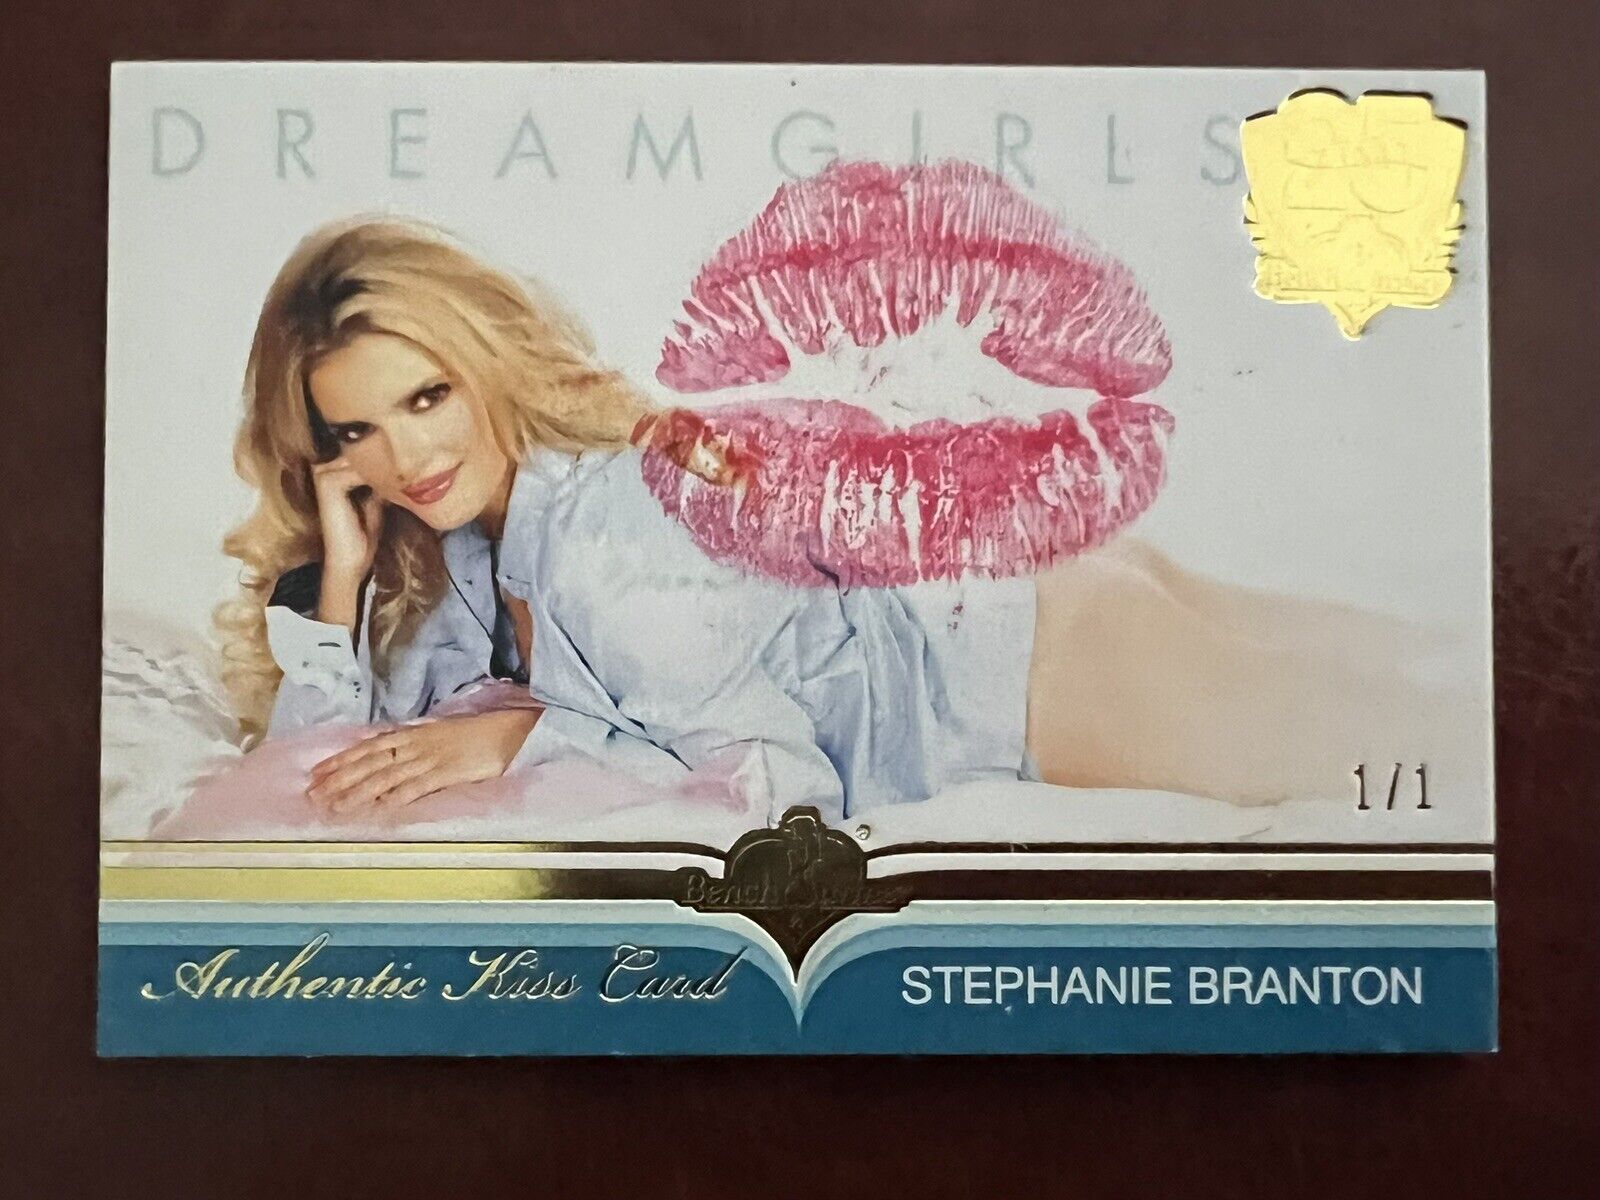 2016 Best Of Benchwarmer Dreamgirls Stephanie Branton  Kiss Card 1/1